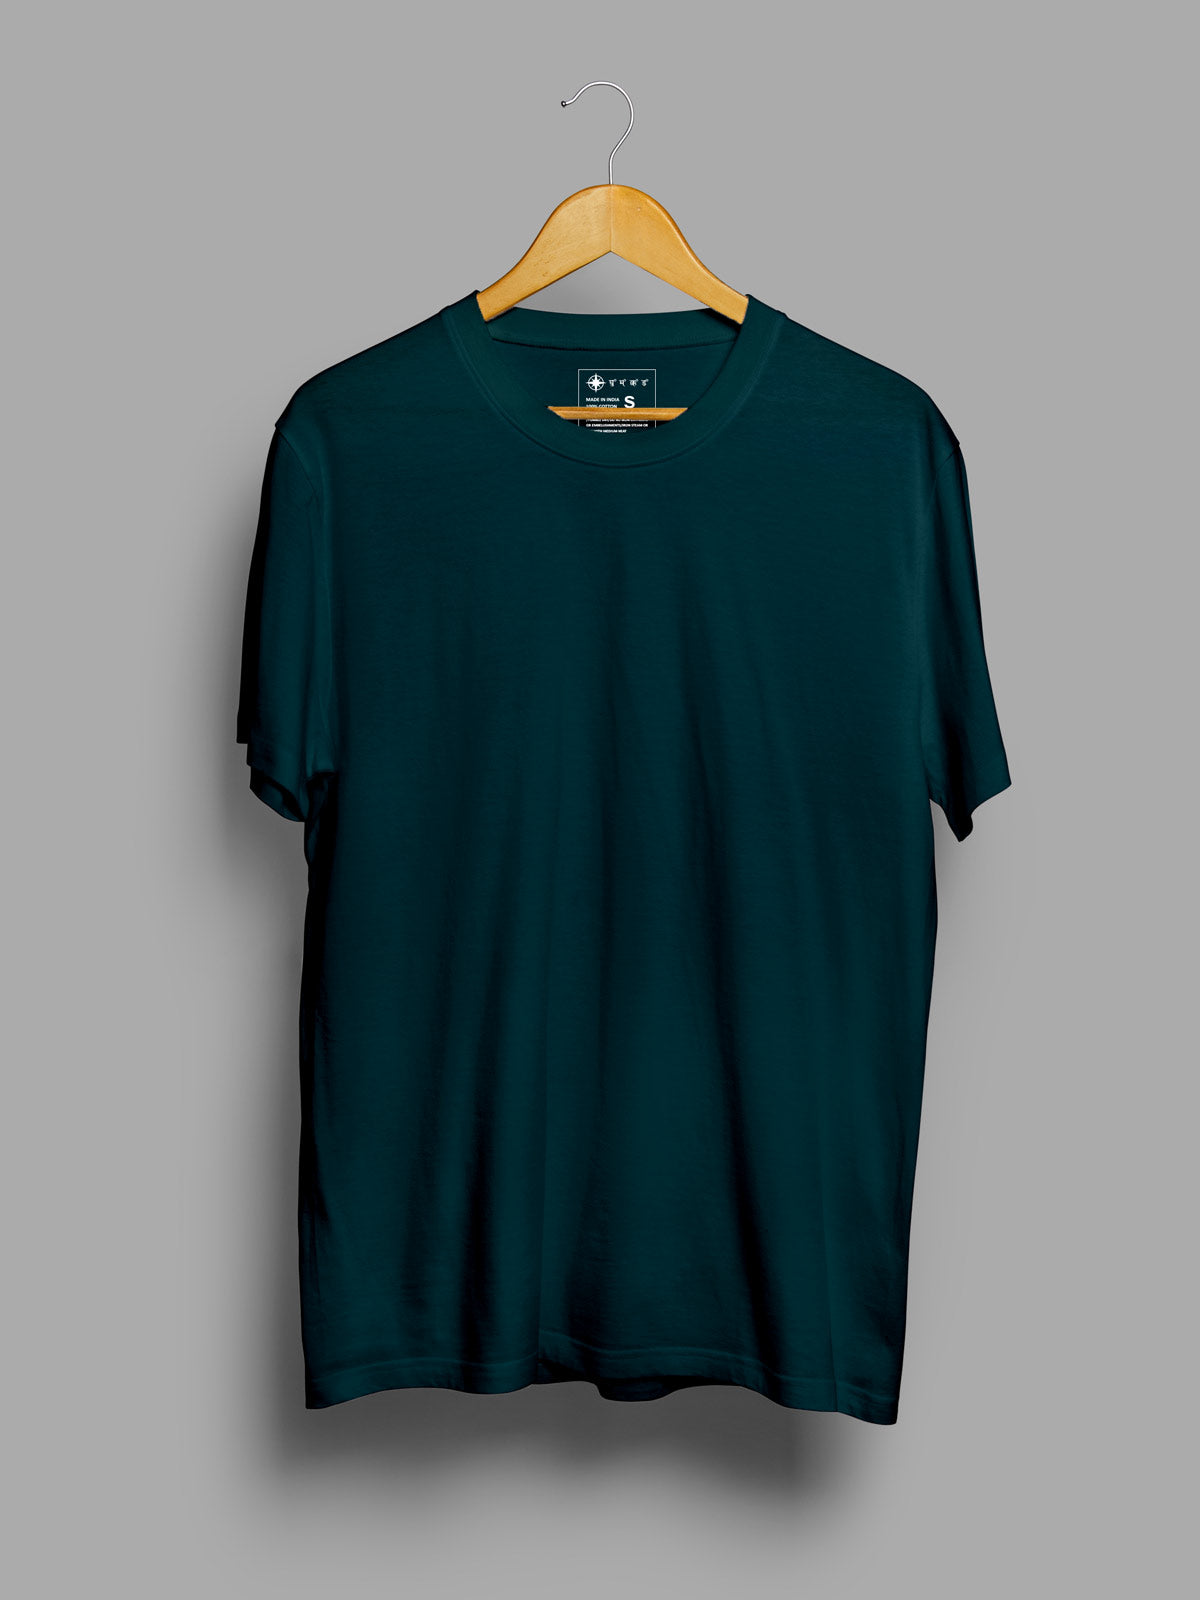 Pack of 2 | Teal Blue & Beige Unisex Plain T shirt